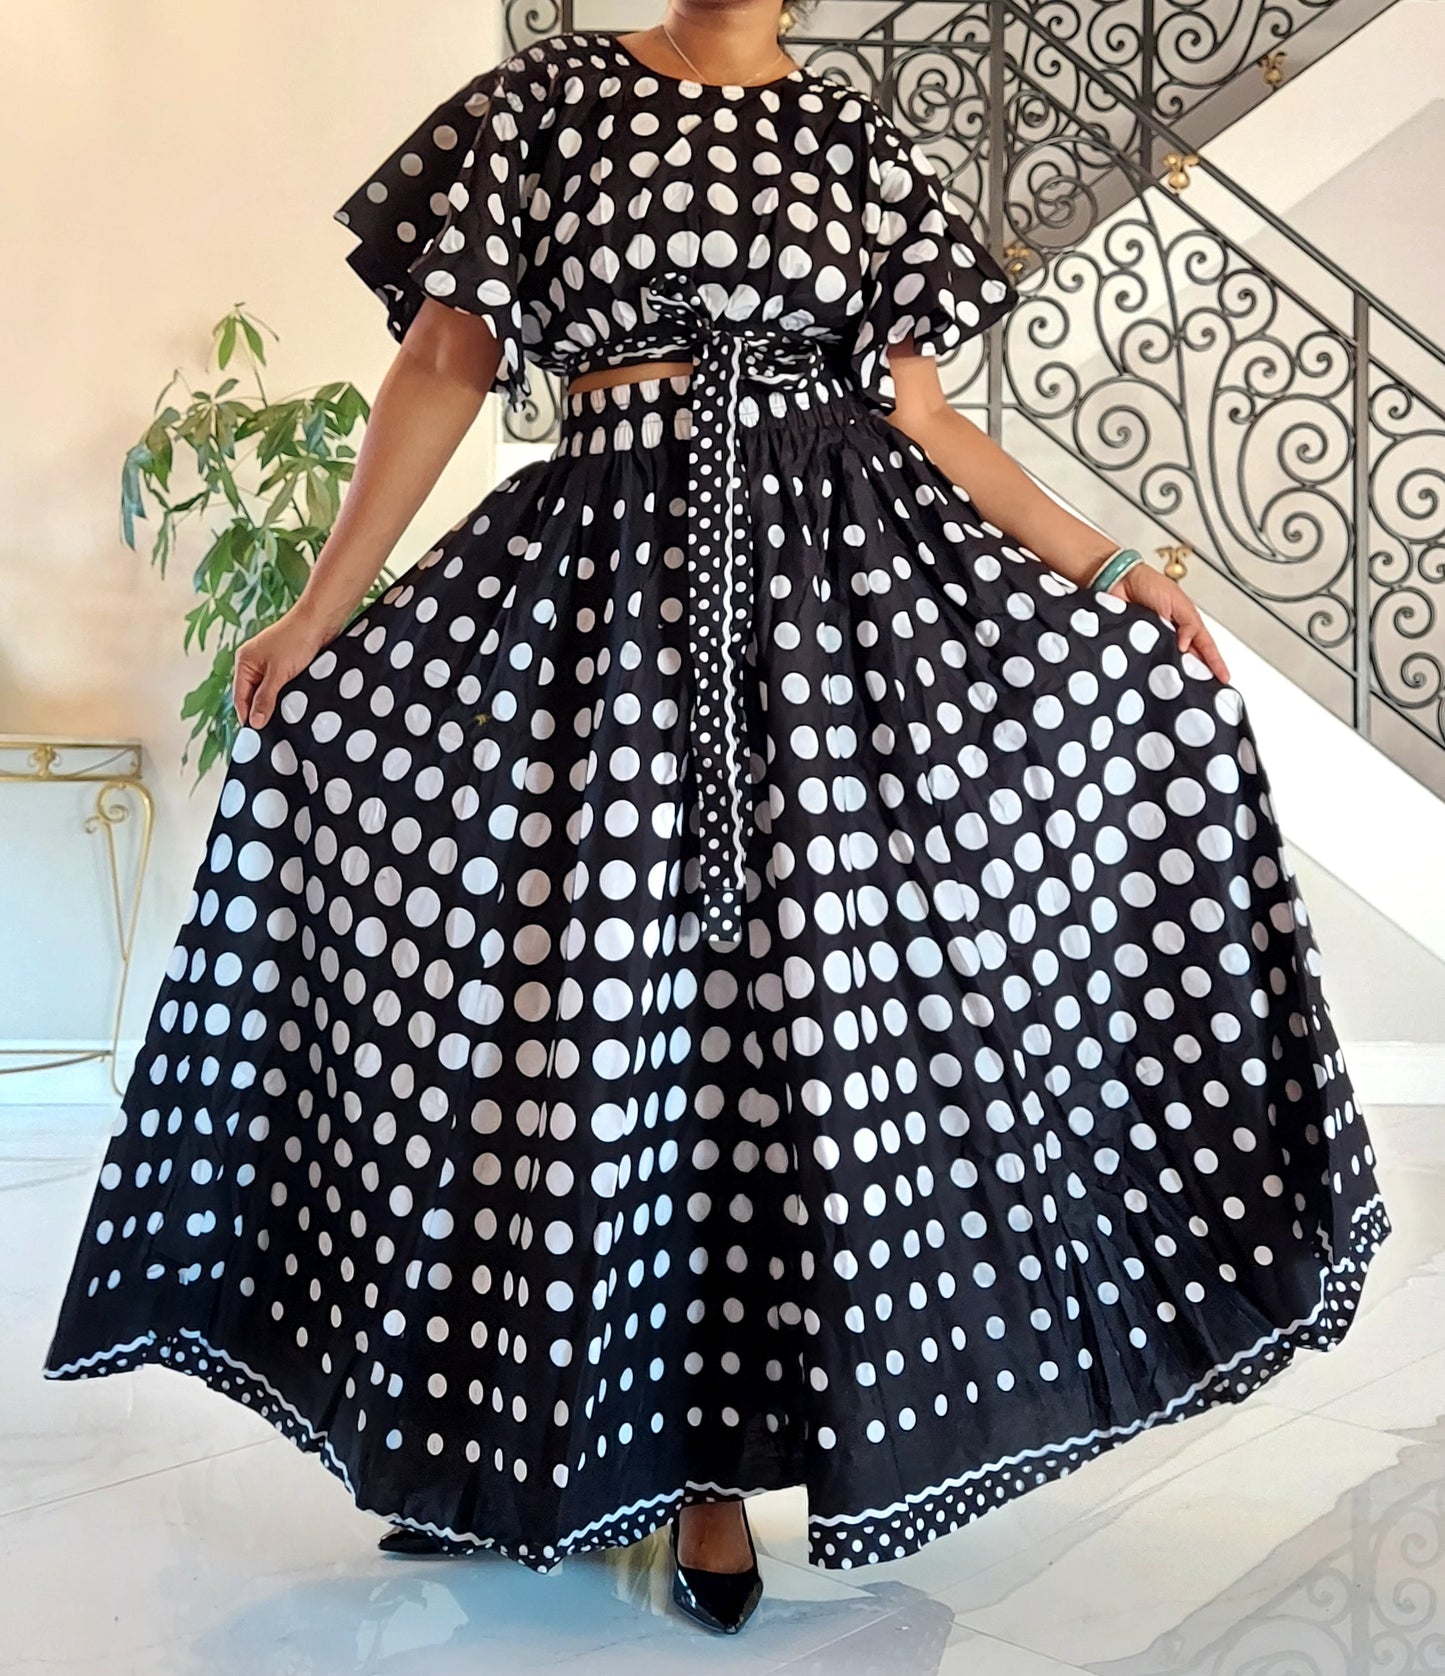 Women Skirt & Crop Top / Polka-Dot/ Black White